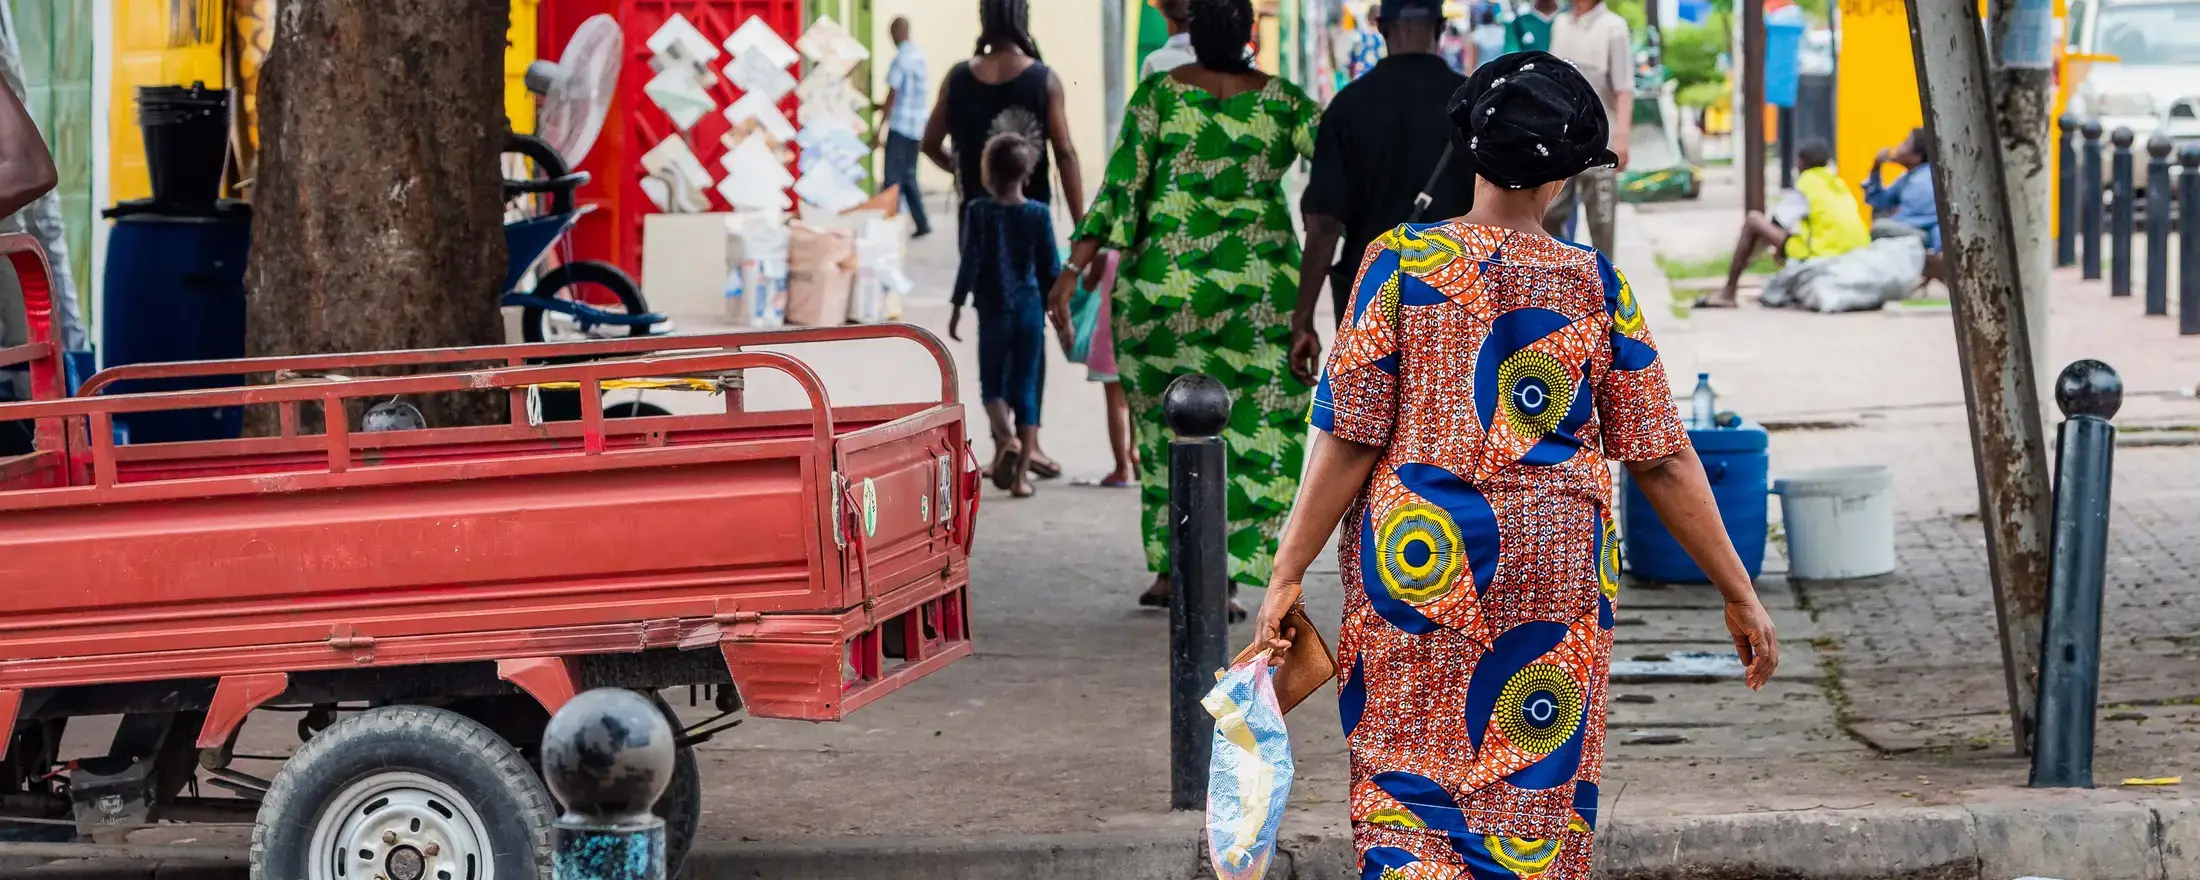 Brazzaville, Republic of Congo [Shutterstock/ mbrand85]